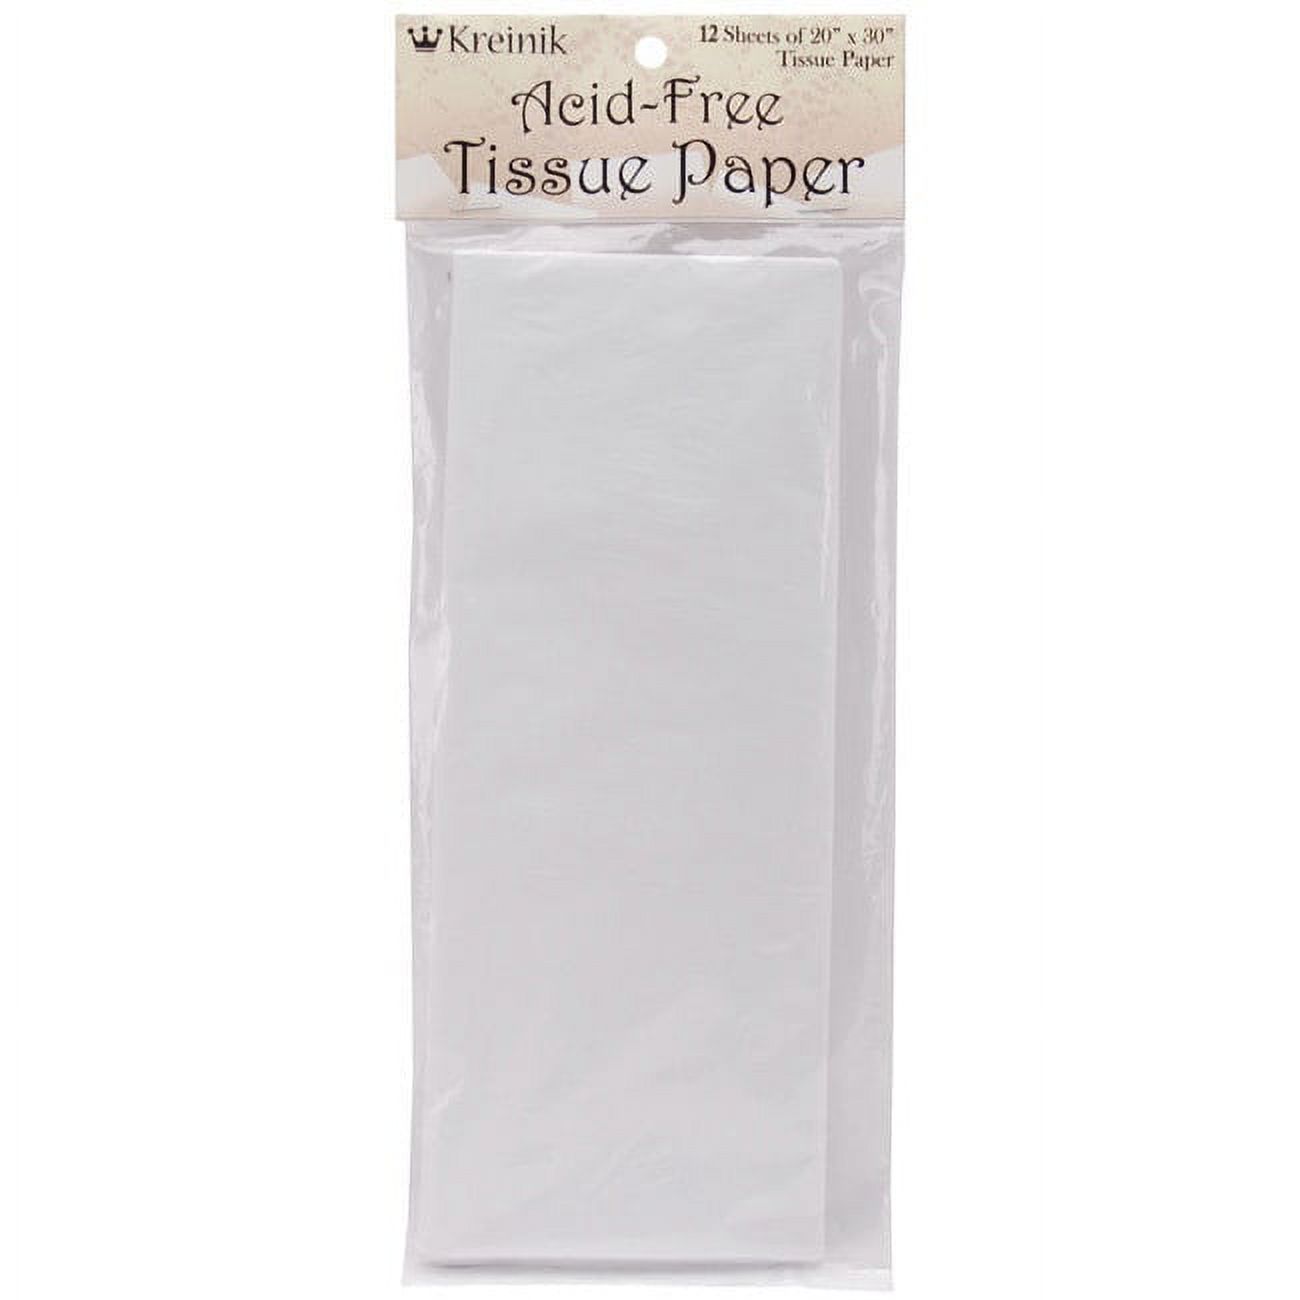 Kreinik Acid Free Tissue Paper, 20" x 30", 12/pkg - image 2 of 3